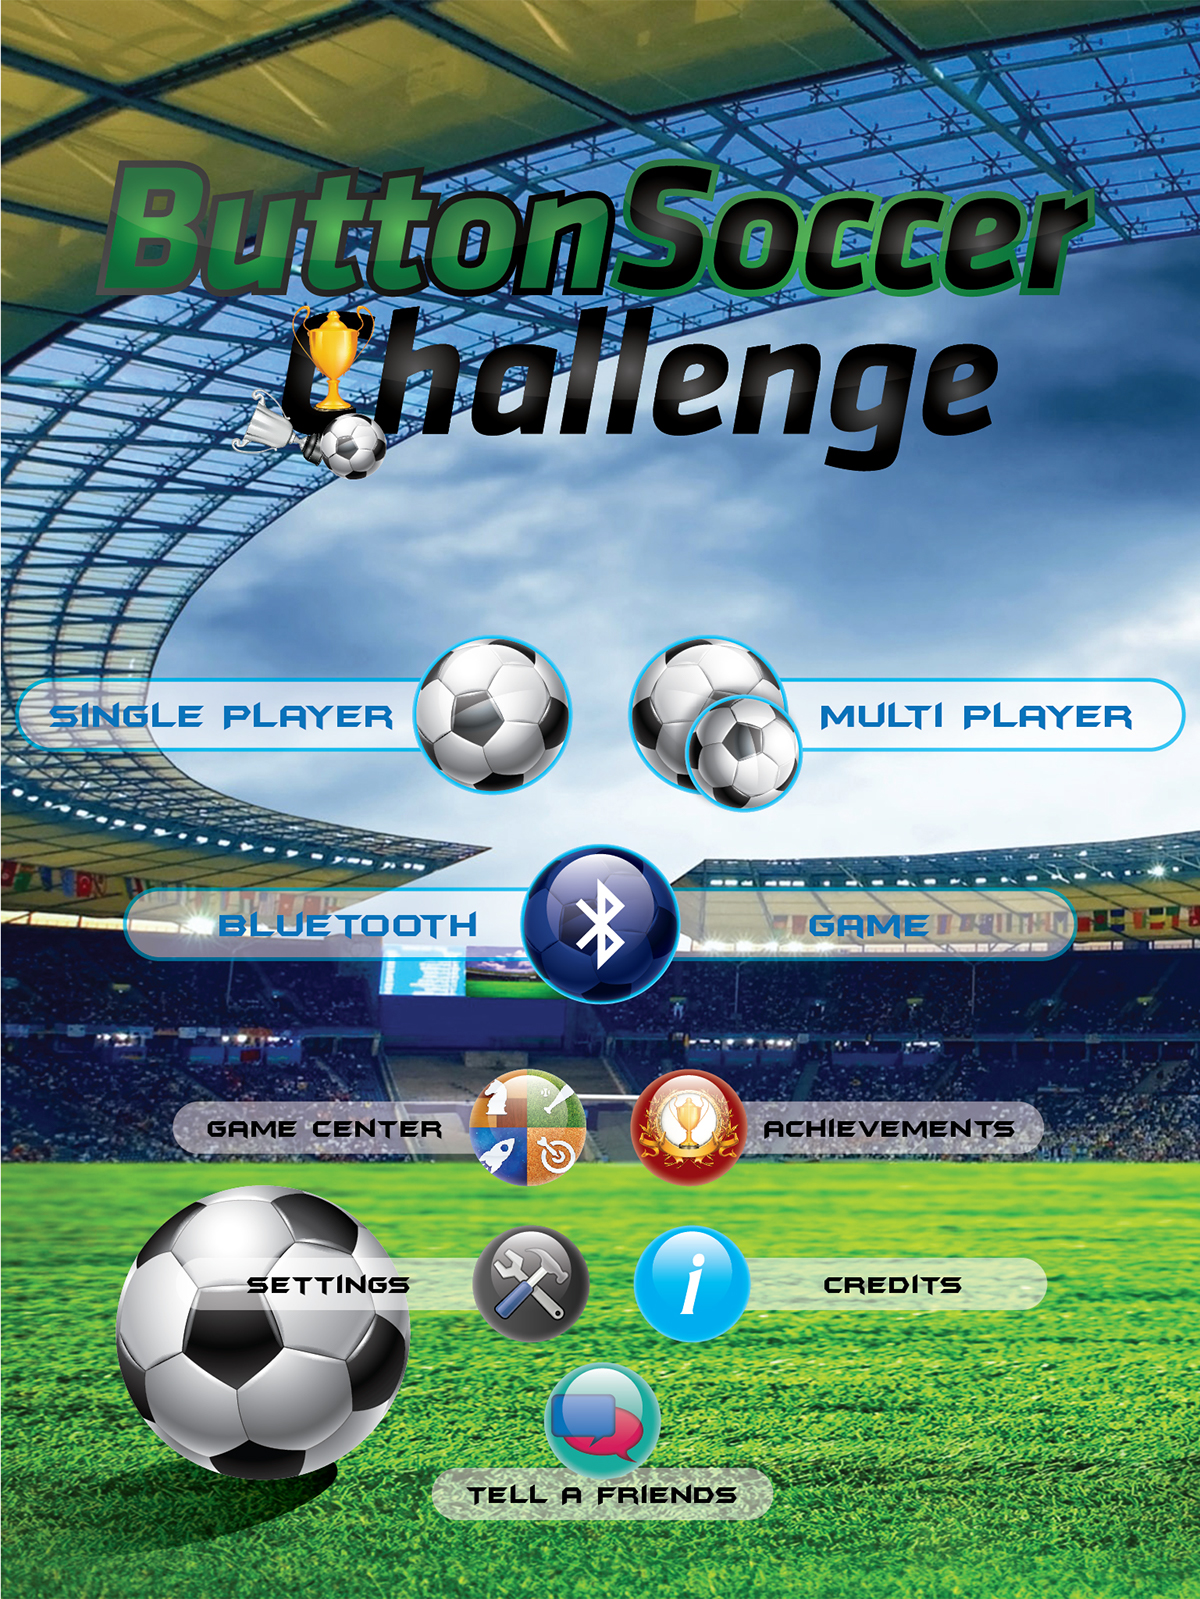 button soccer iPad game football menu UI ui design user interface design Game UI Desgin apple ipad